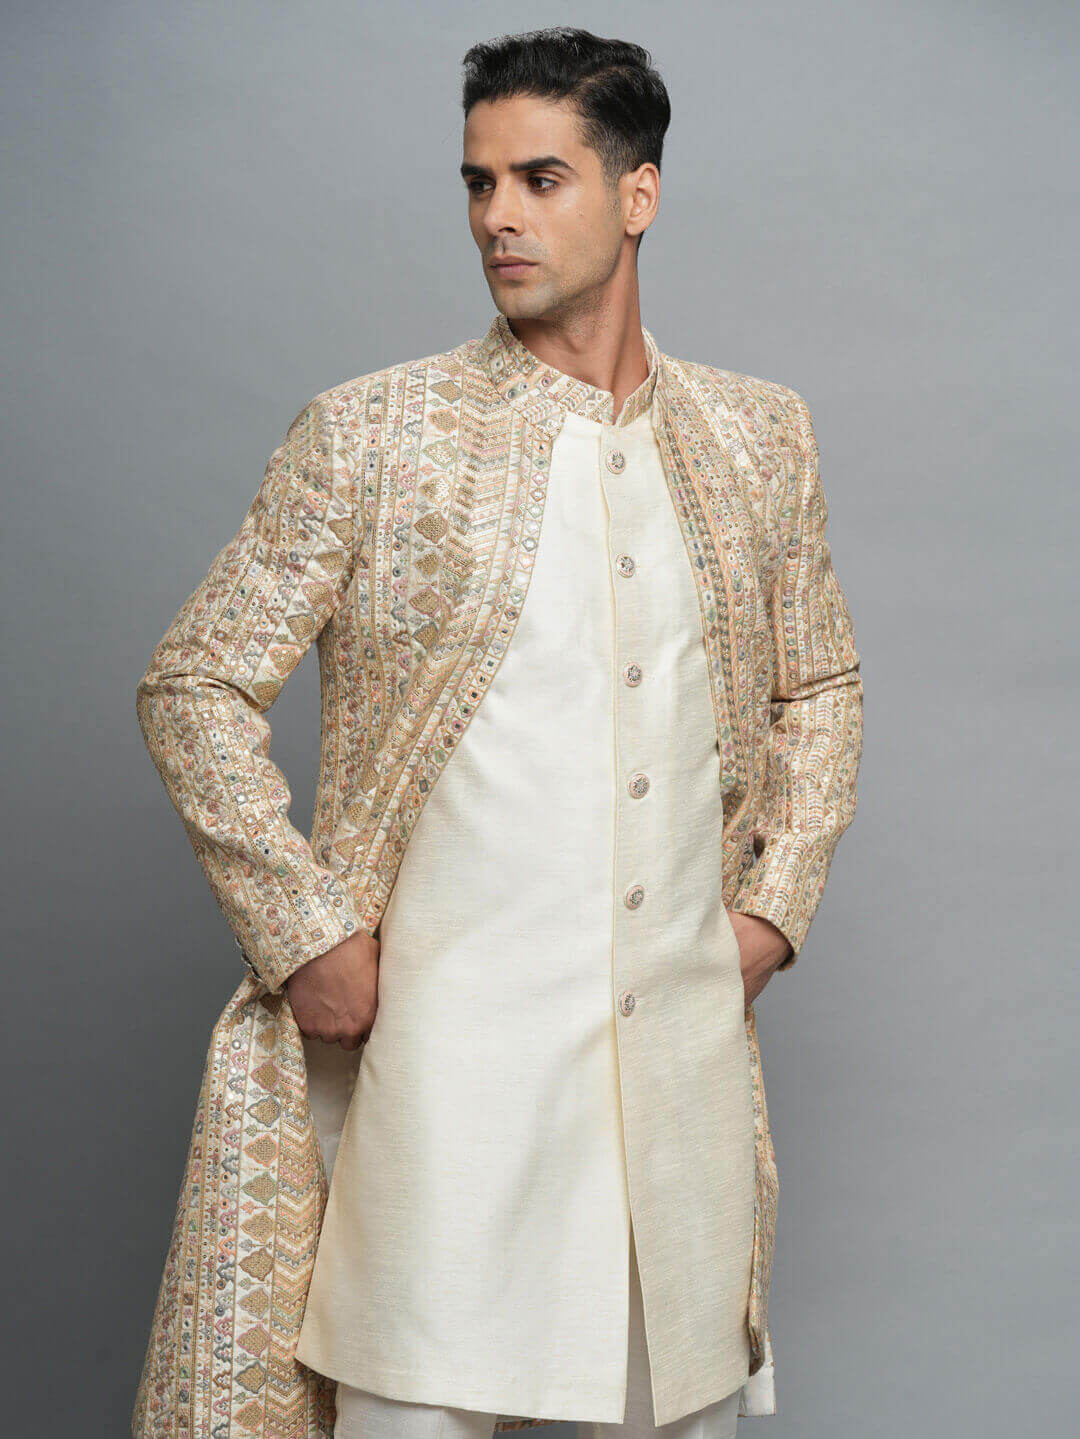 Groom Heavy Embroidered Jacket Sherwani